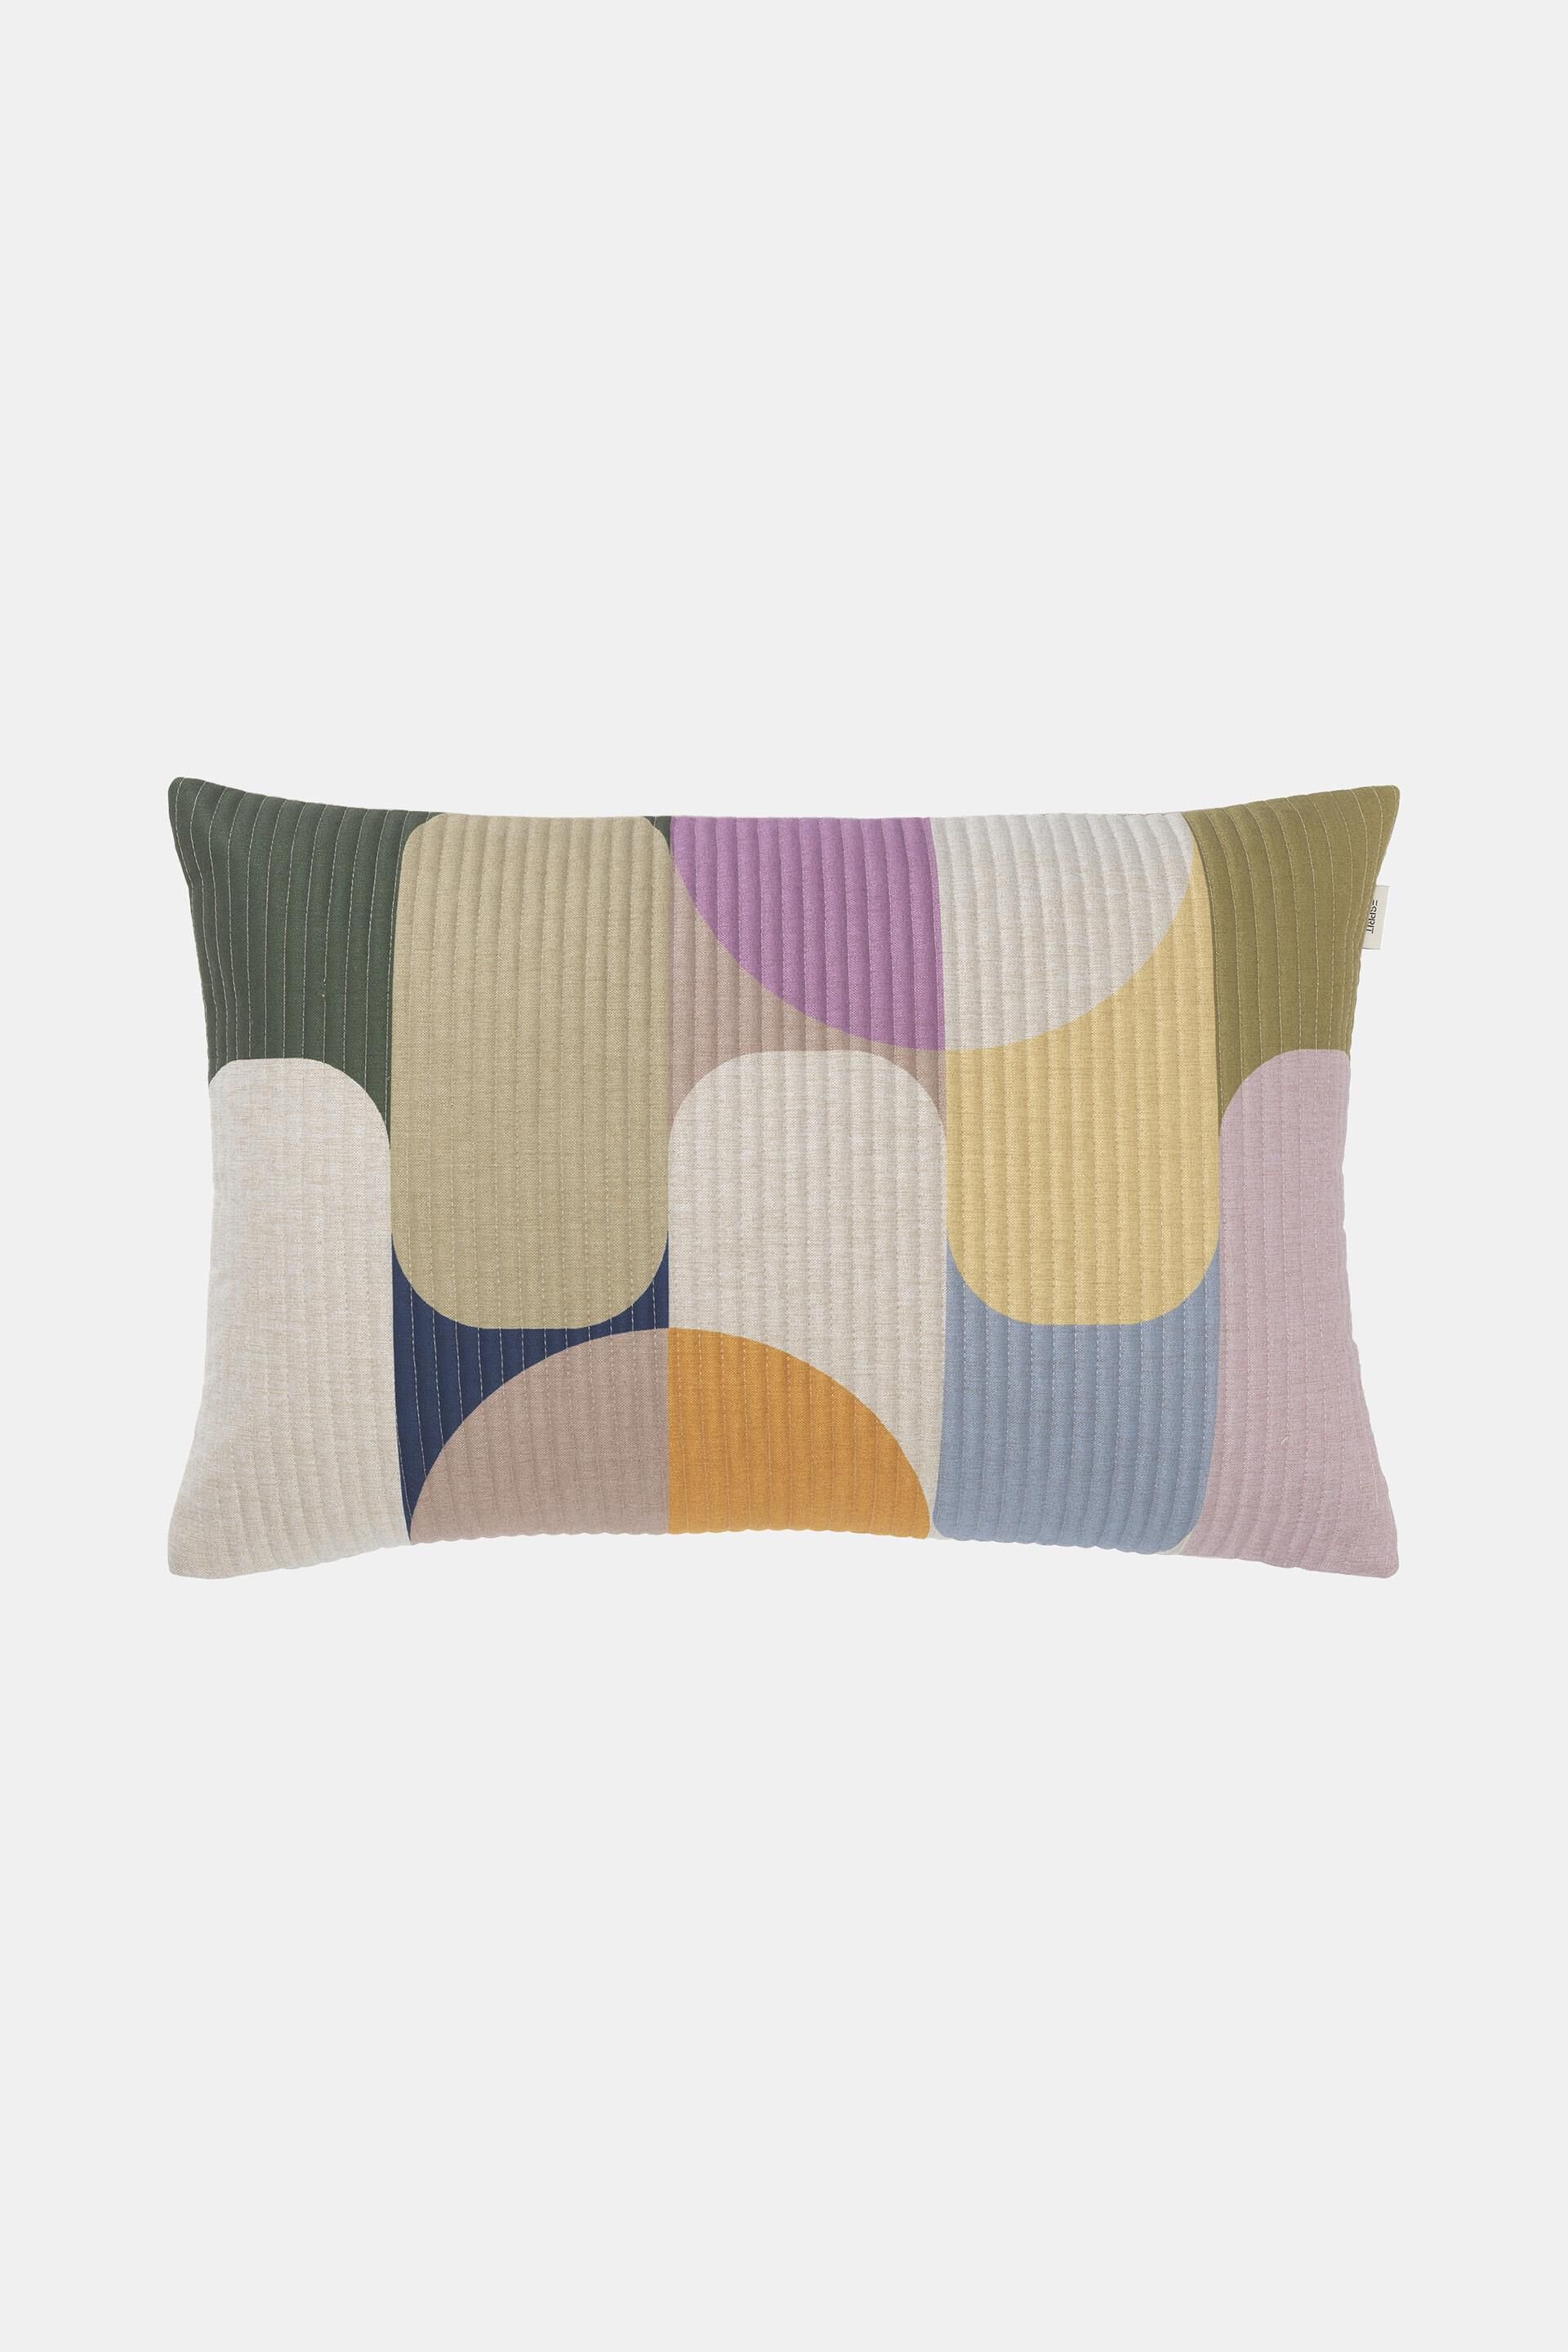 Esprit cover retro Cushion with pattern multi-coloured